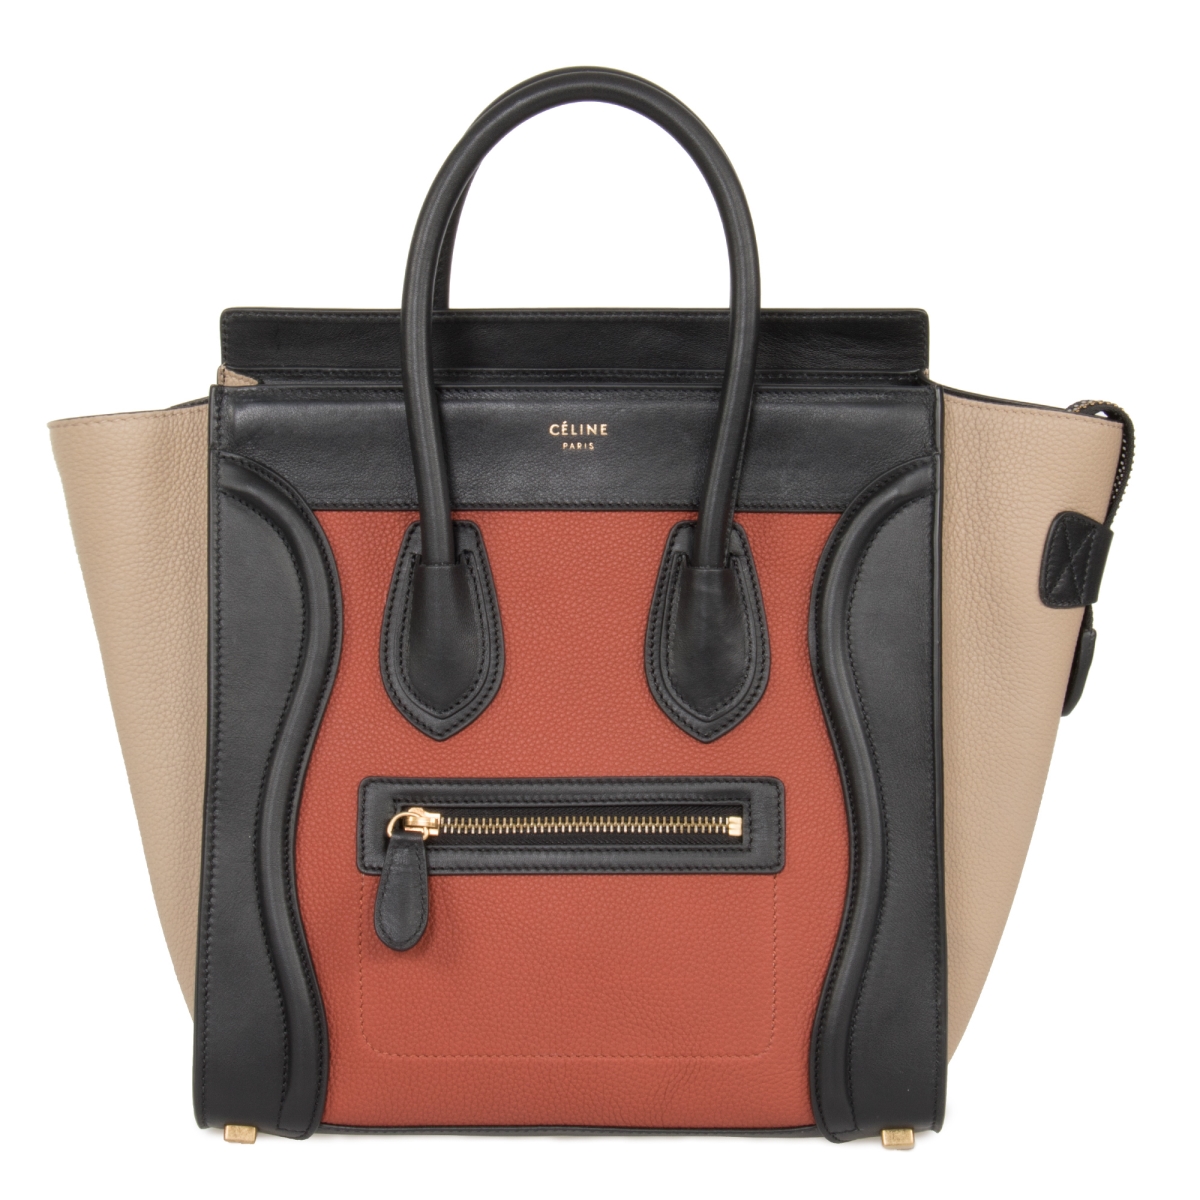 Cel-hbag-micro-tri-tan-blk Micro Luggage Leather Bag - Tri-color, Black & Tan